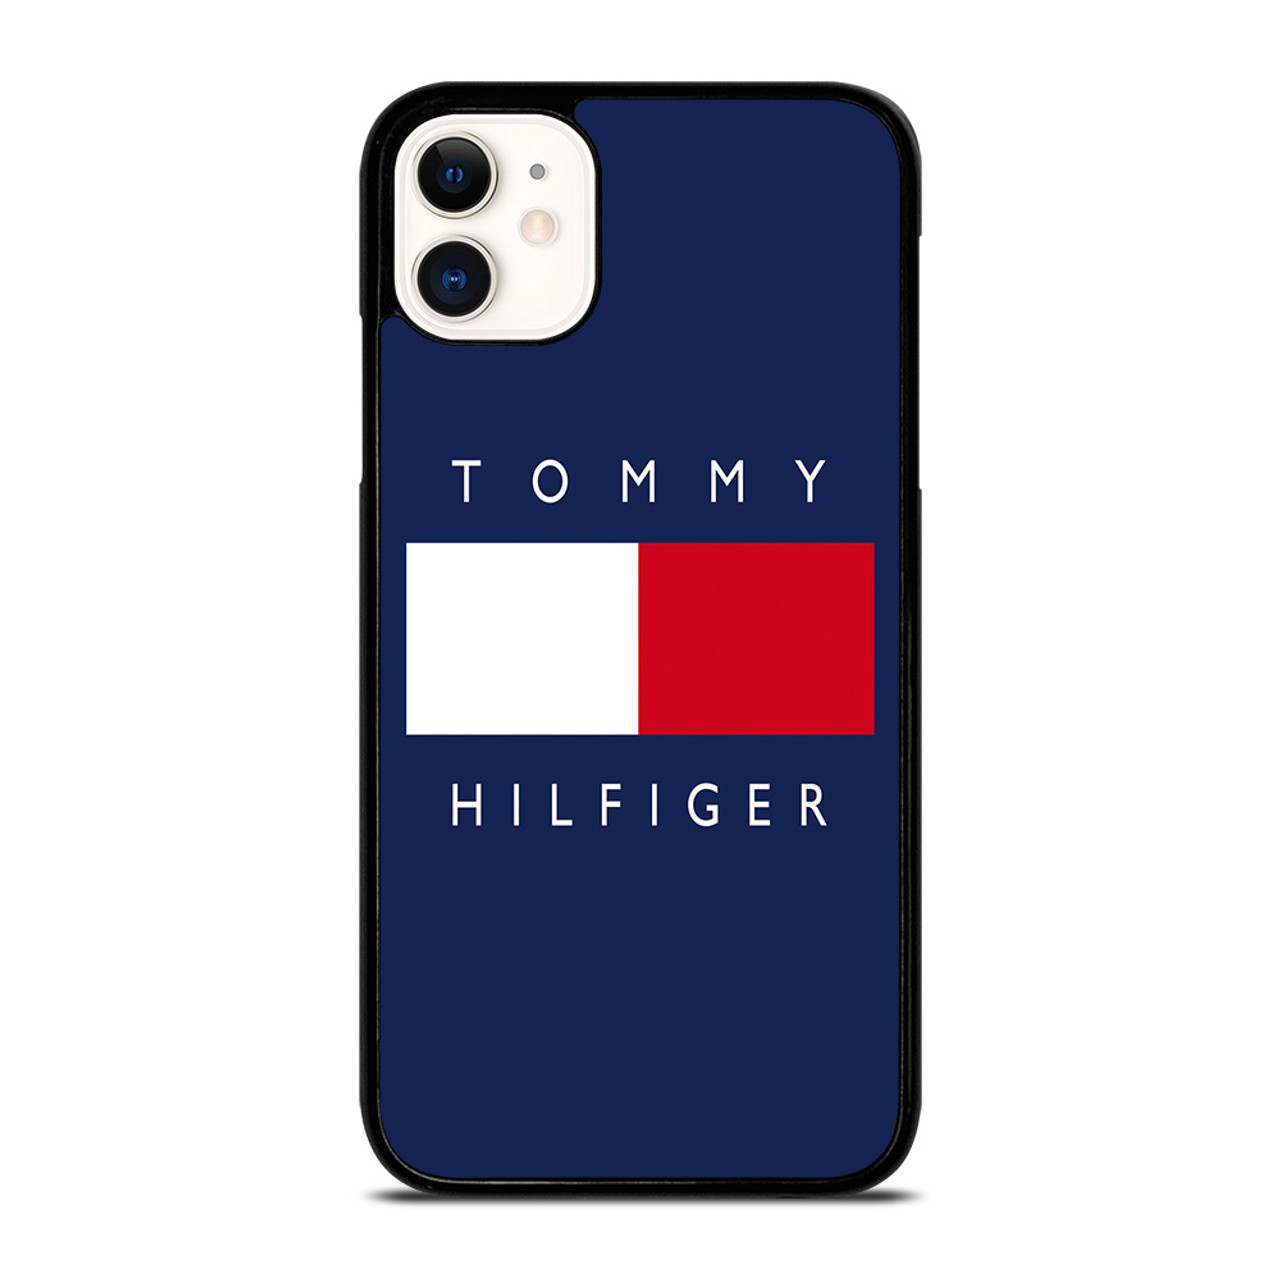 HILFIGER iPhone 11 Case Cover